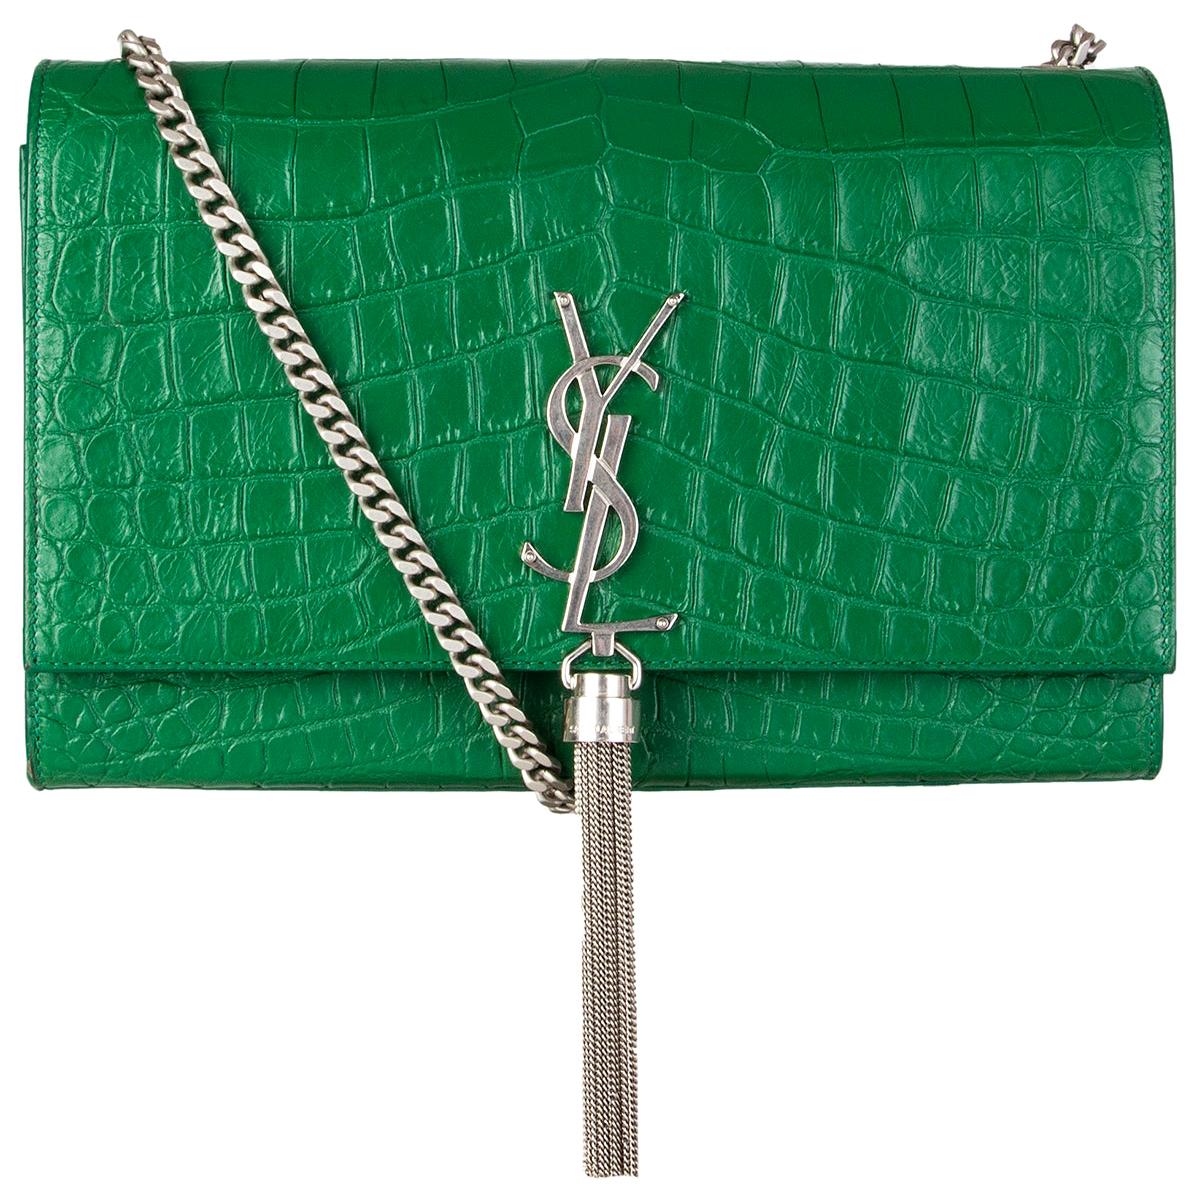 SAINT LAURENT emerald green KATE MEDIUM TASSEL EMBOSSED CROC Shoulder Bag